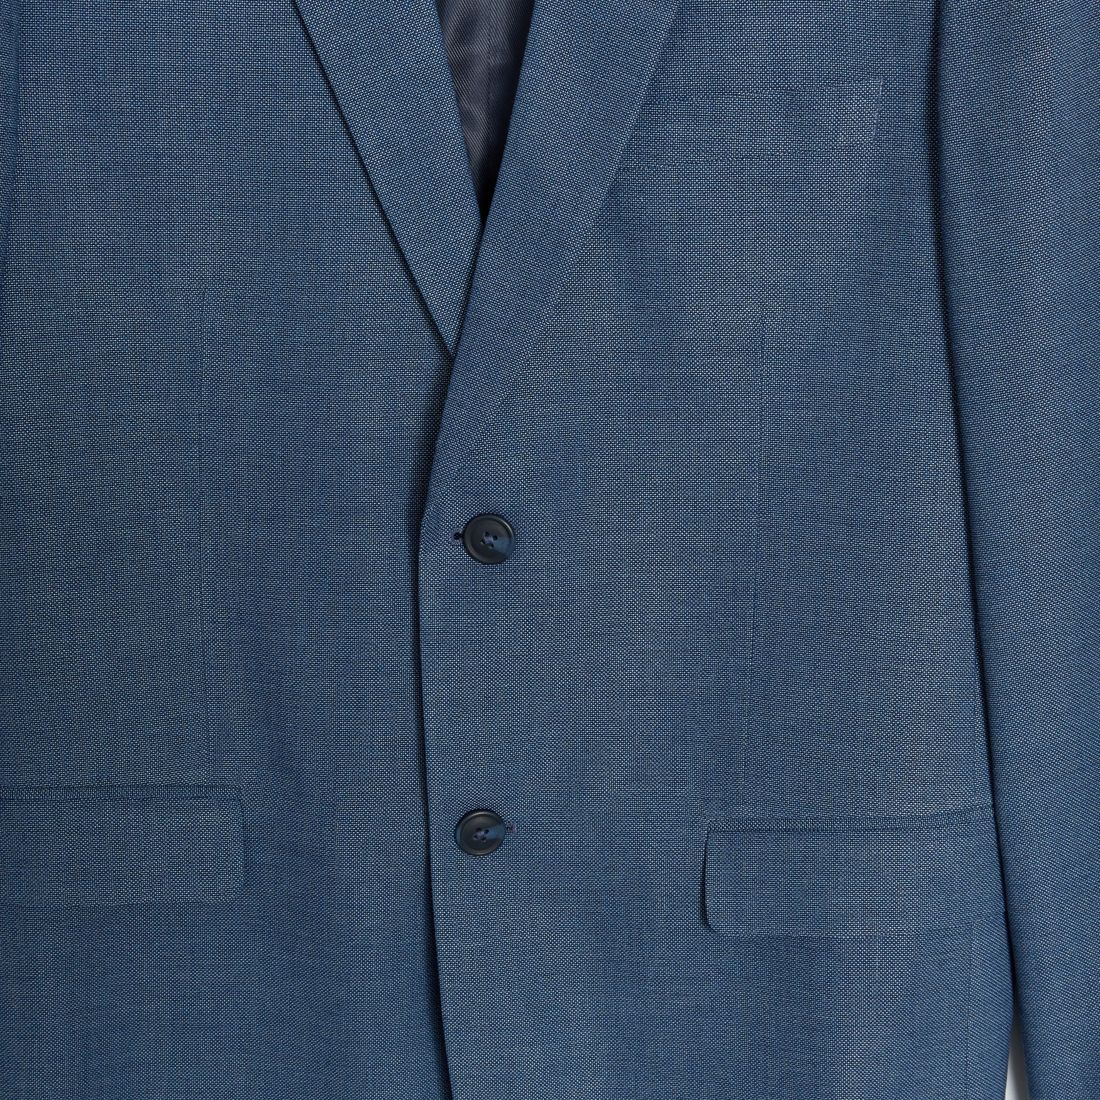 Preview Textured Suit Jacket | Target Australia